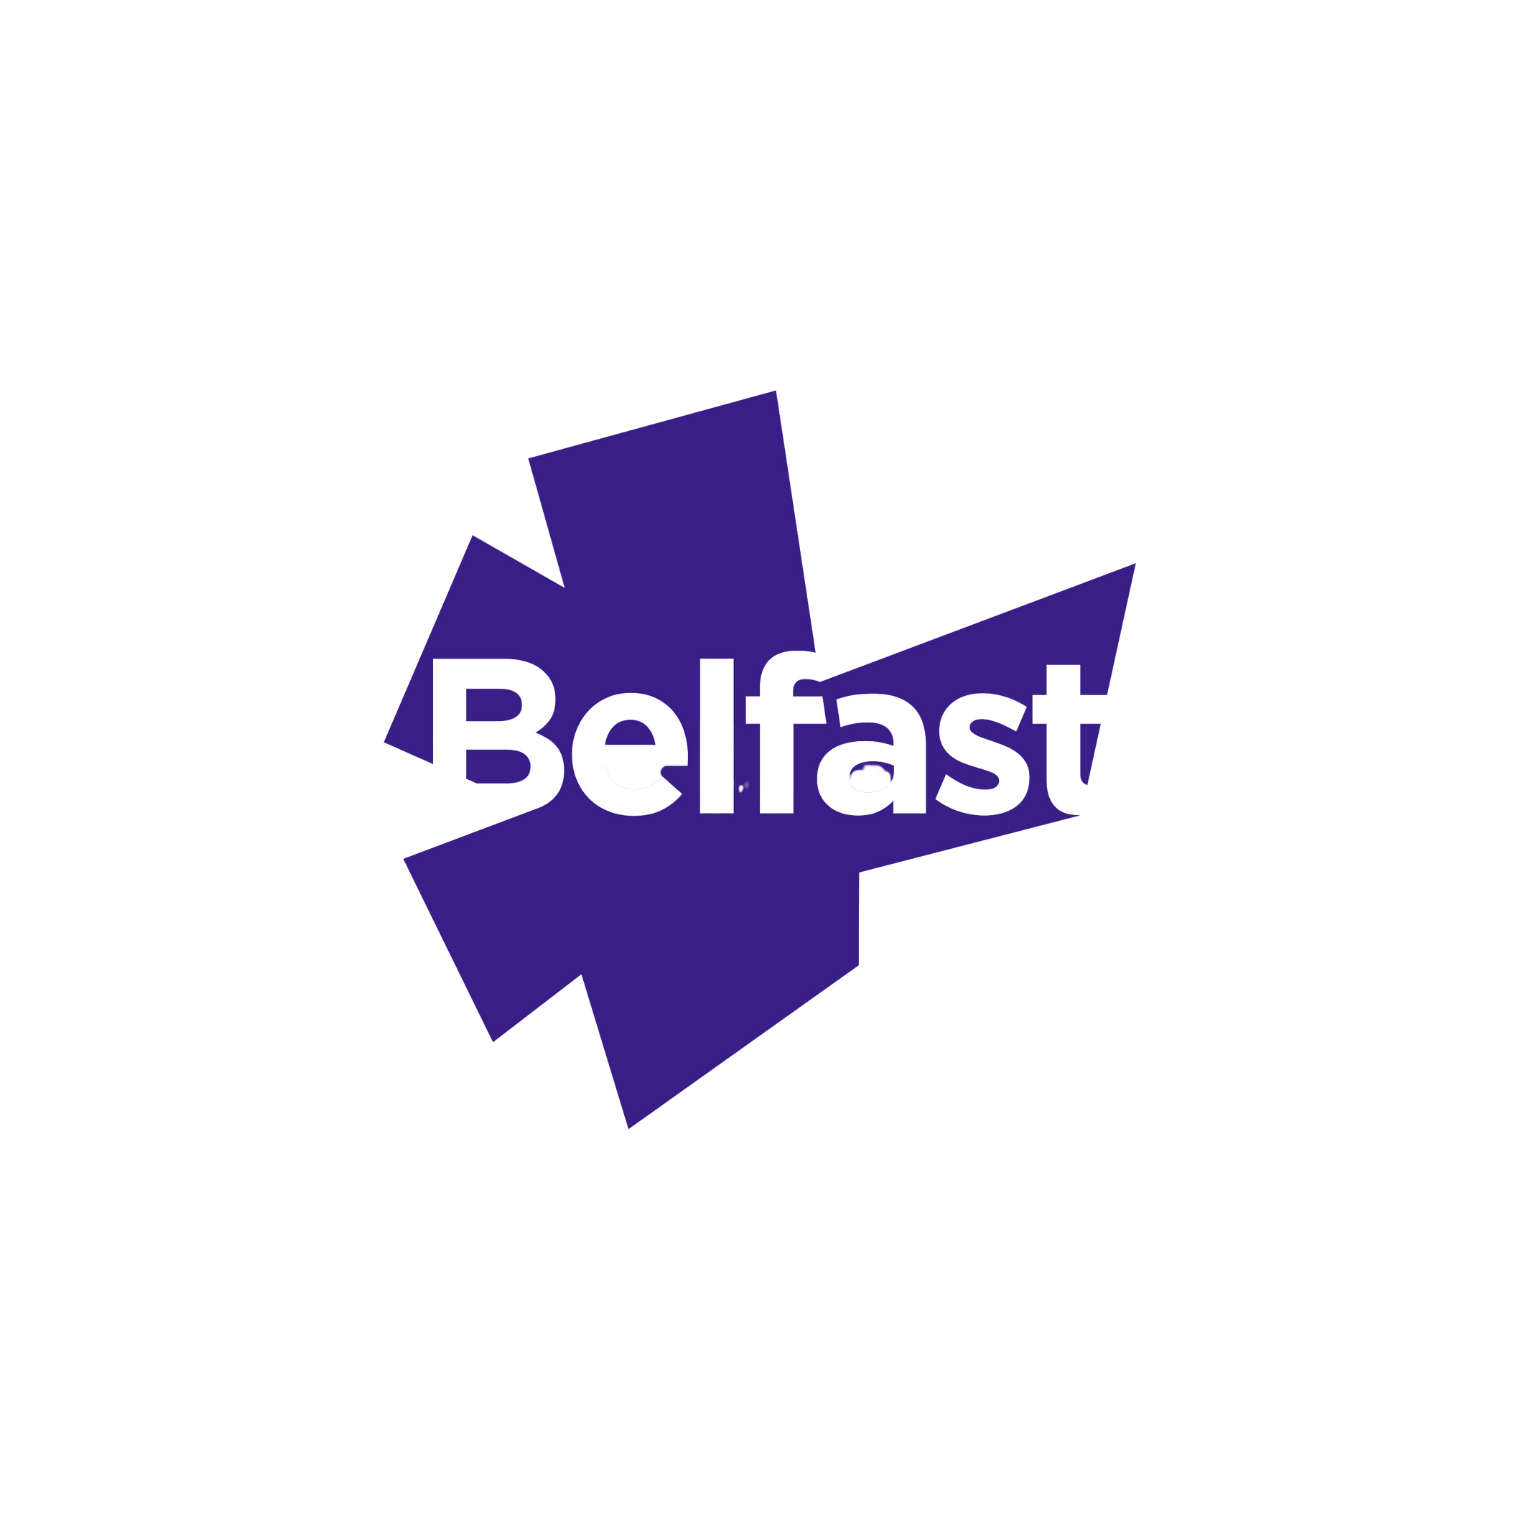 Belfast city logo